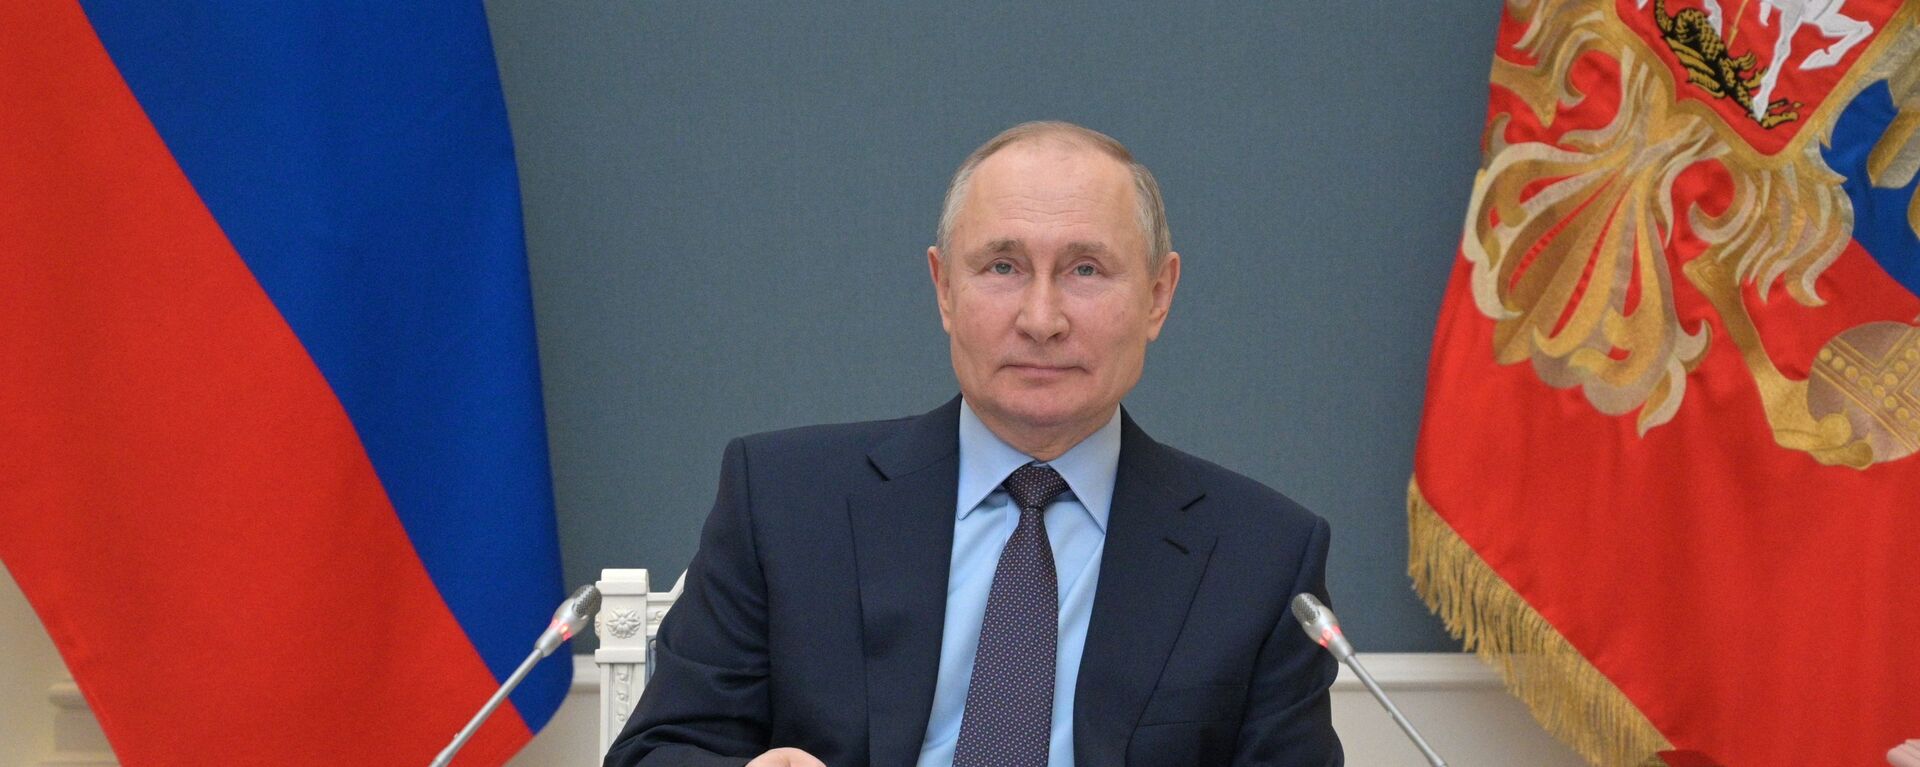 Predsednik Rusije Vladimir Putin - Sputnik Srbija, 1920, 22.04.2021